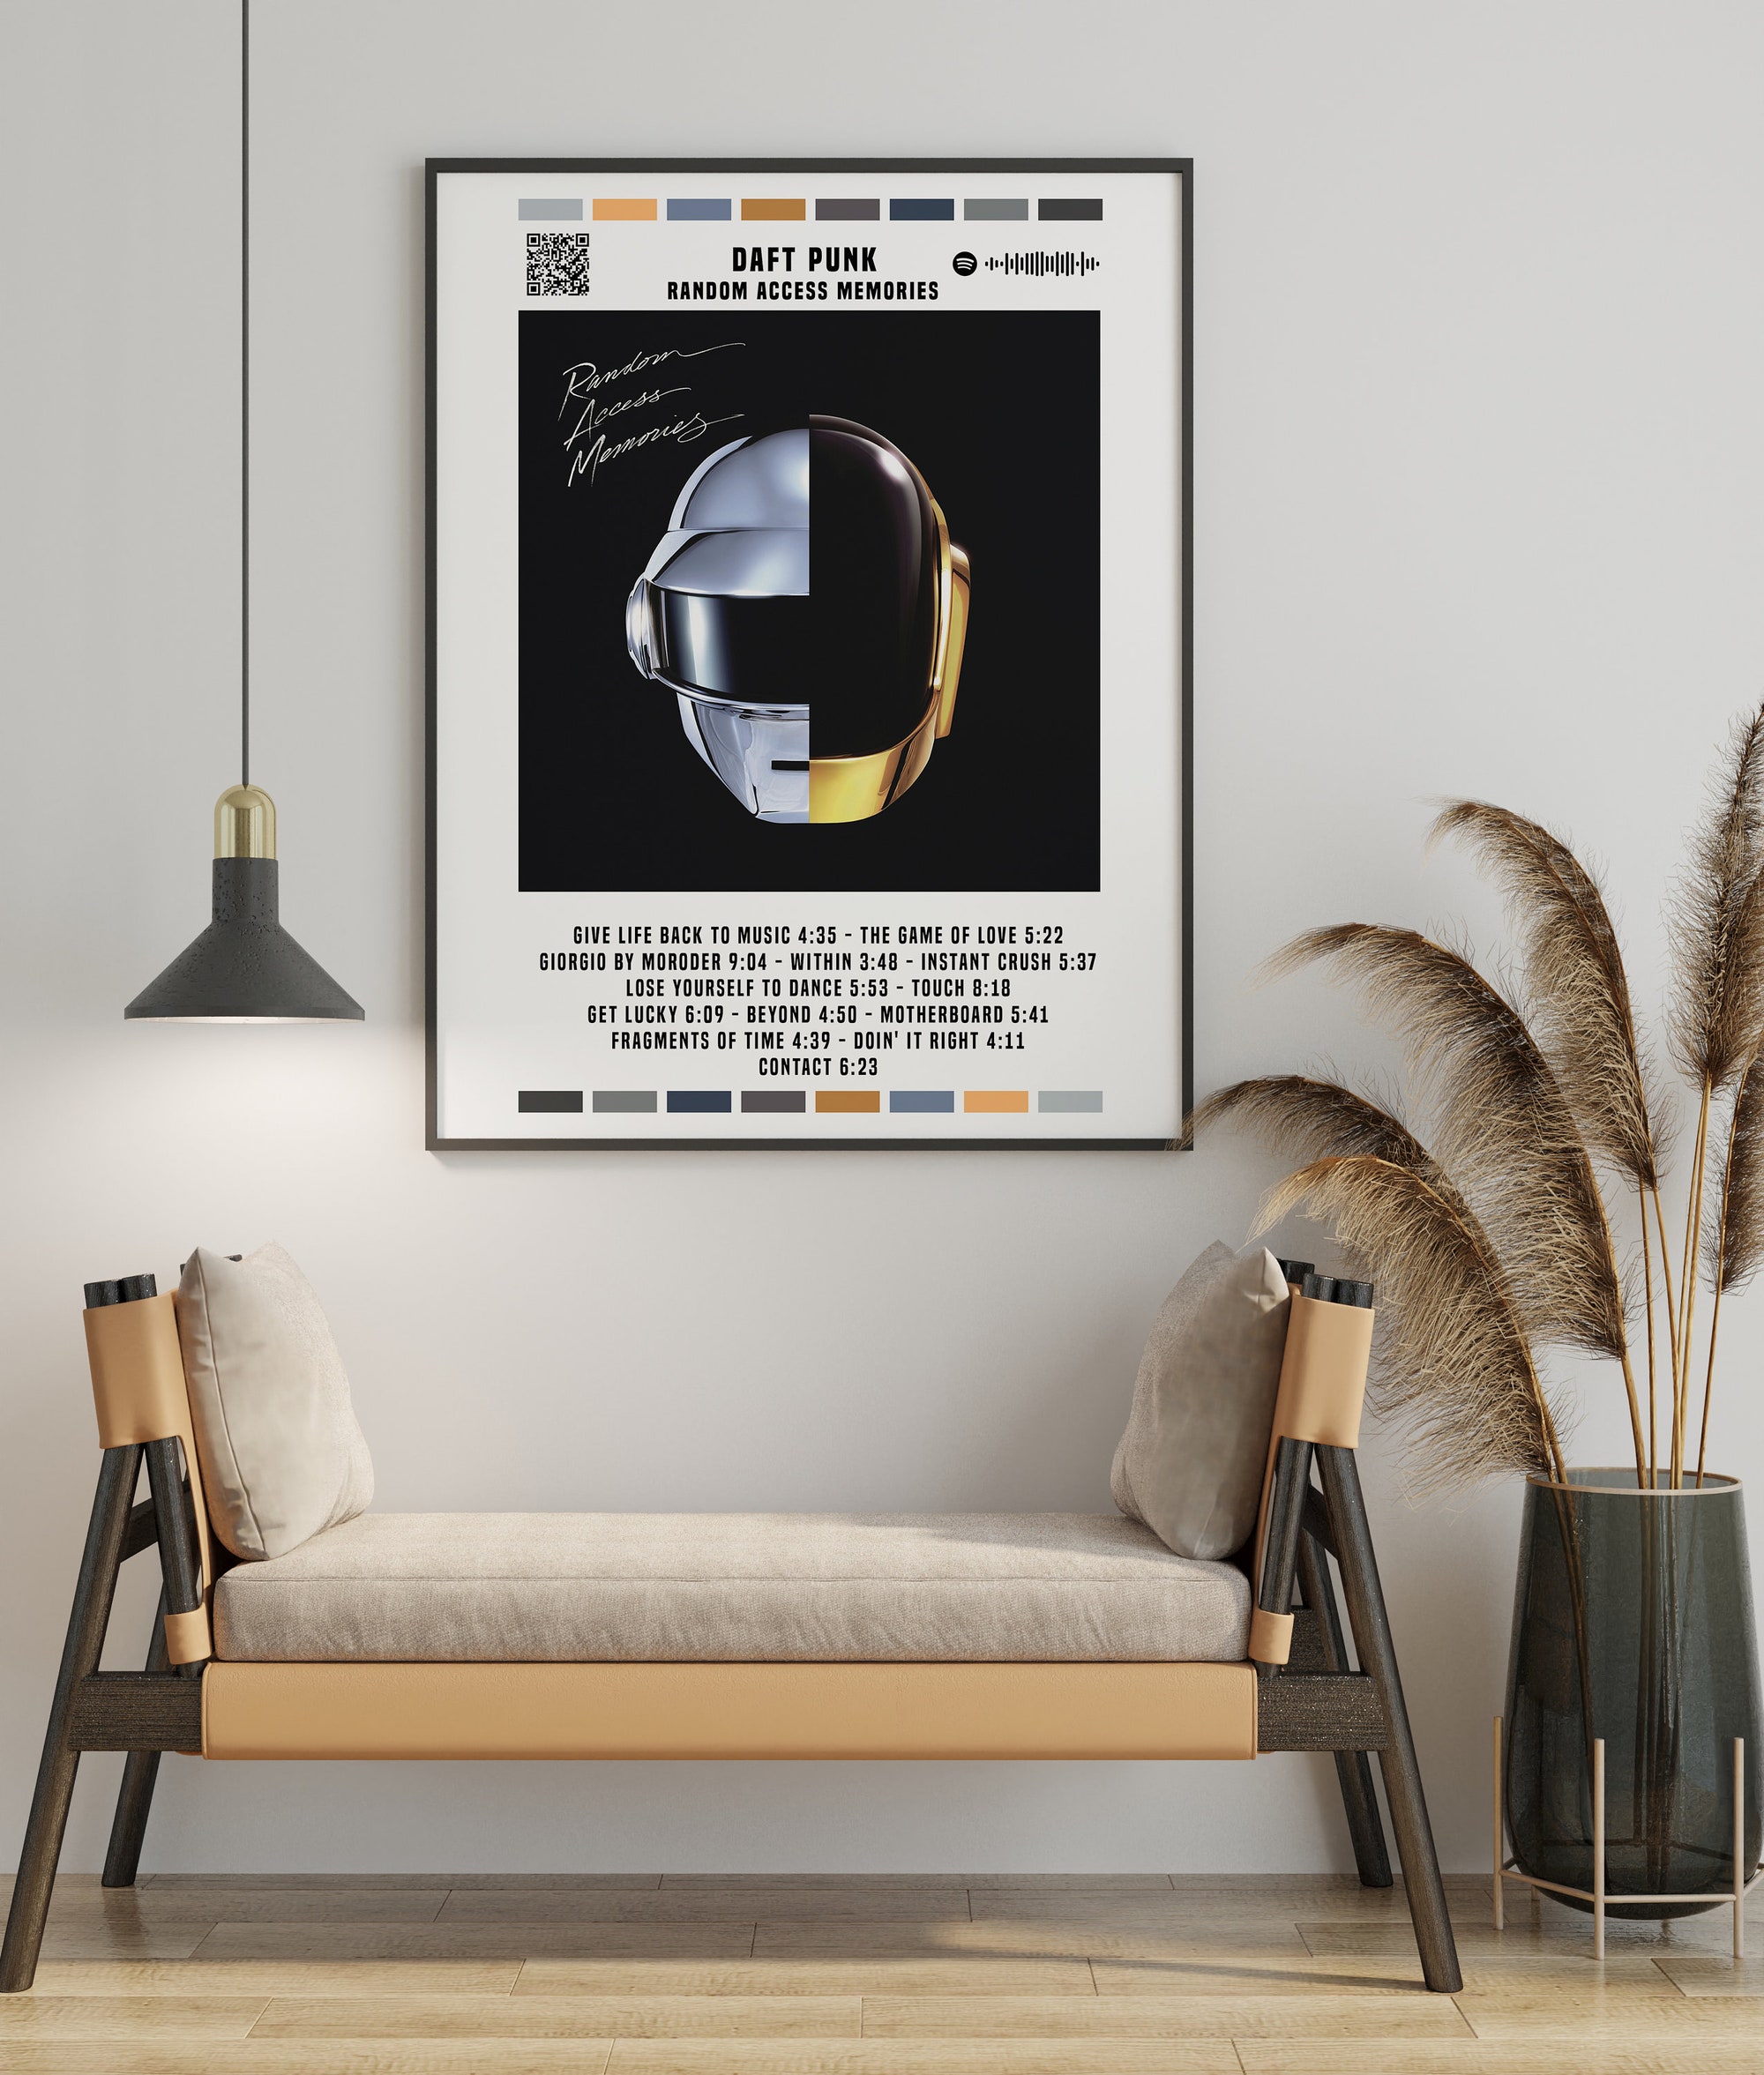 Daft Punk - Daft Punk Helmet Poster - Daft Punk Poster - Daft Punk Ram Poster